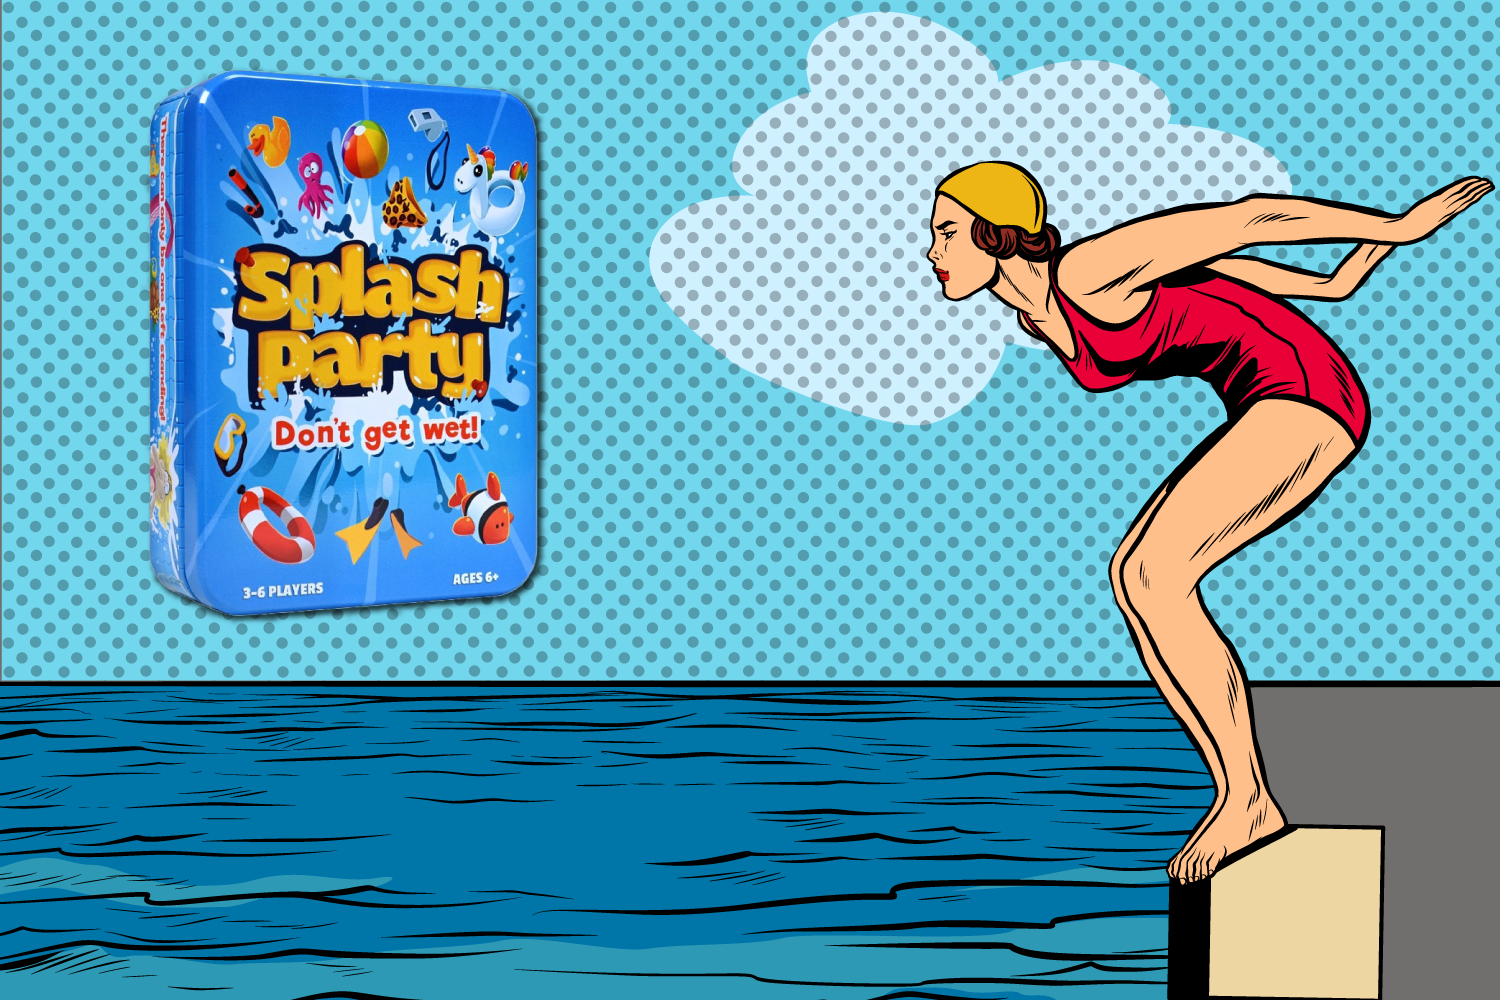 Splash-Party-Review-Header-Image